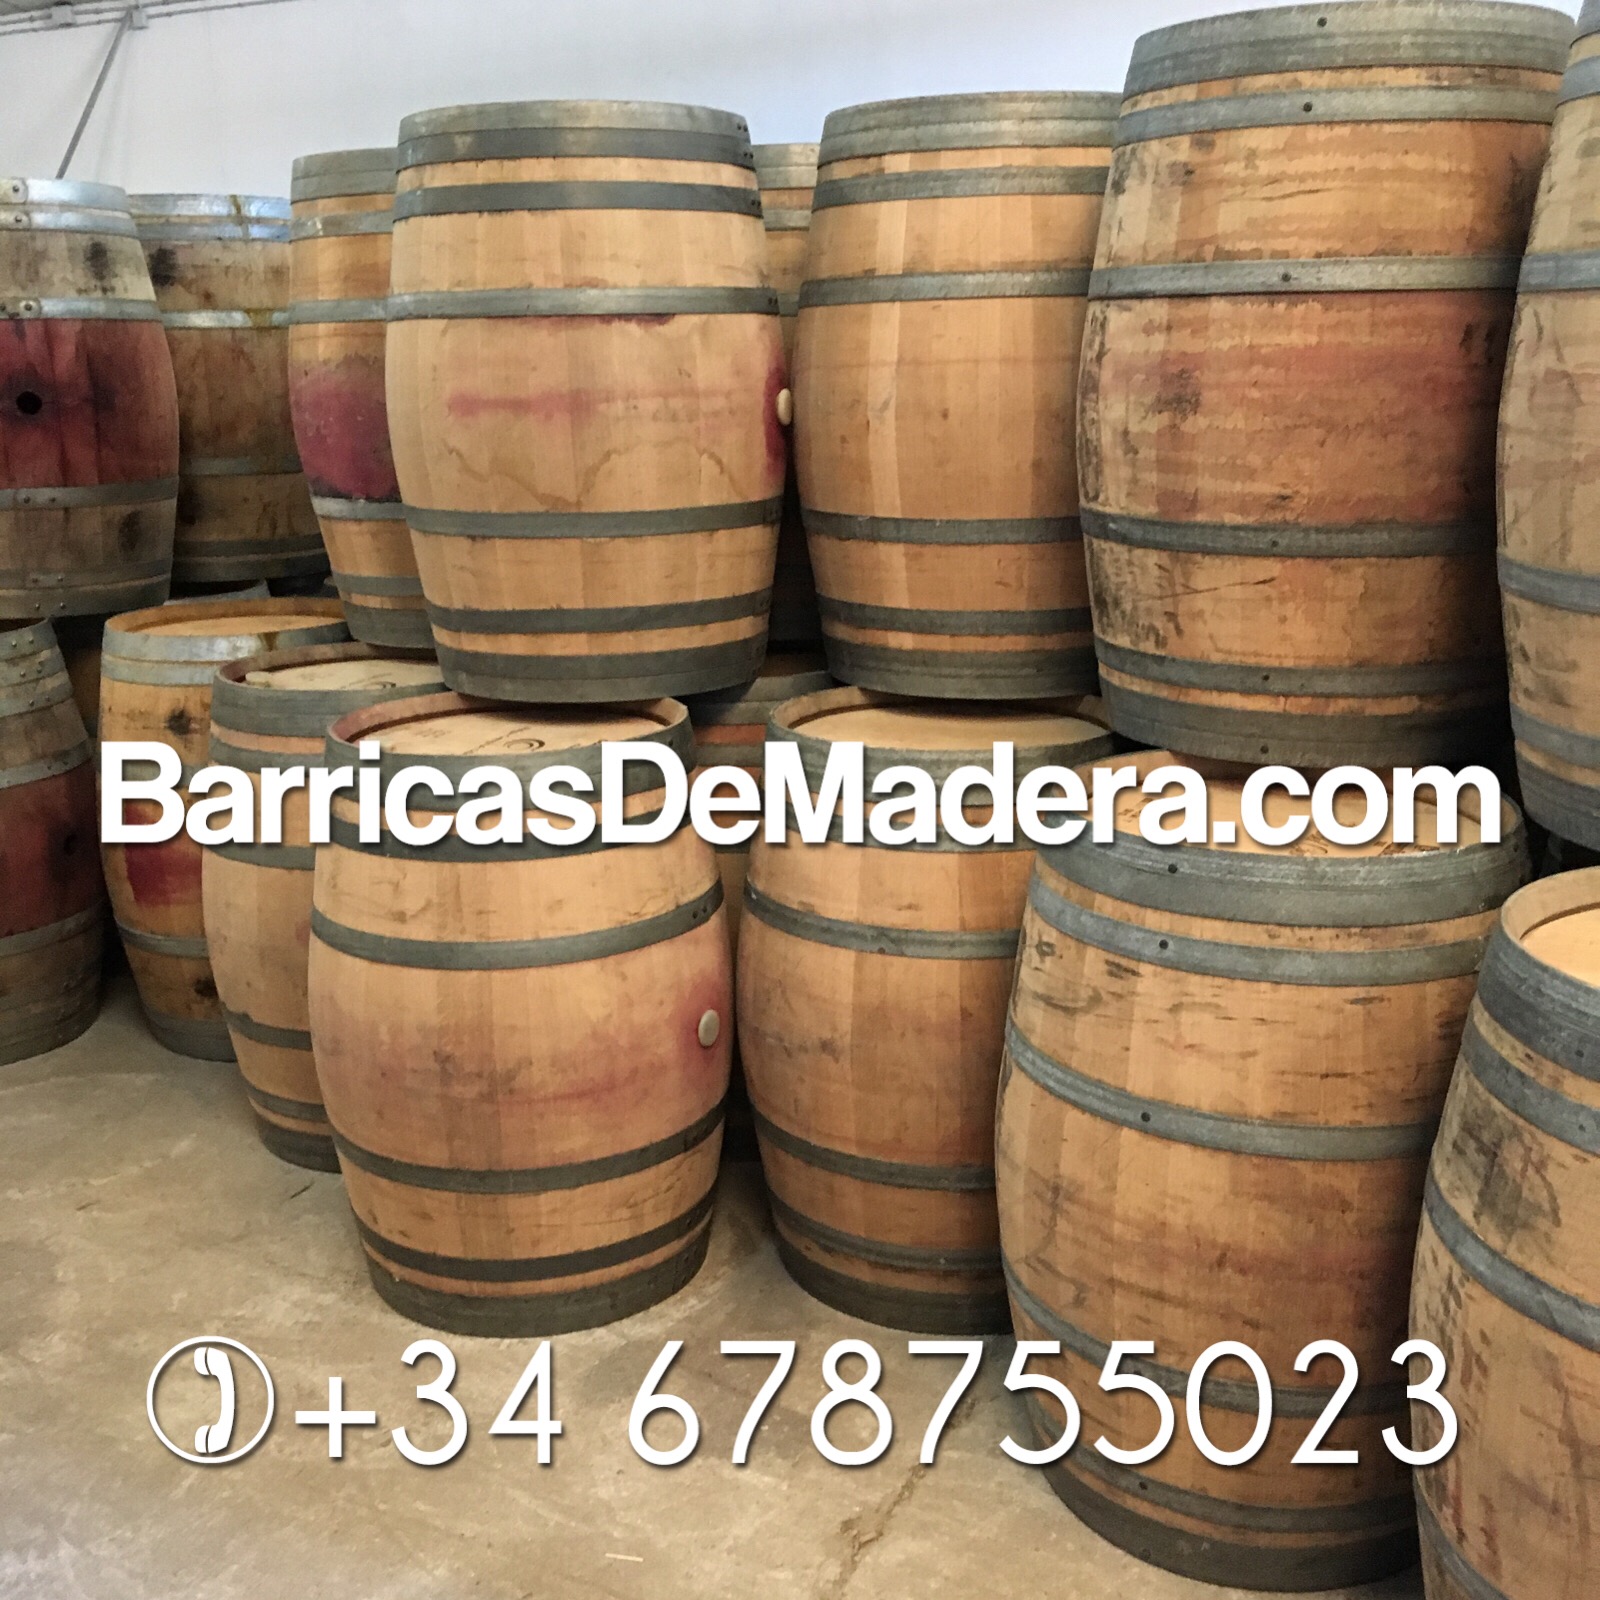 wholesale wine barrels spain